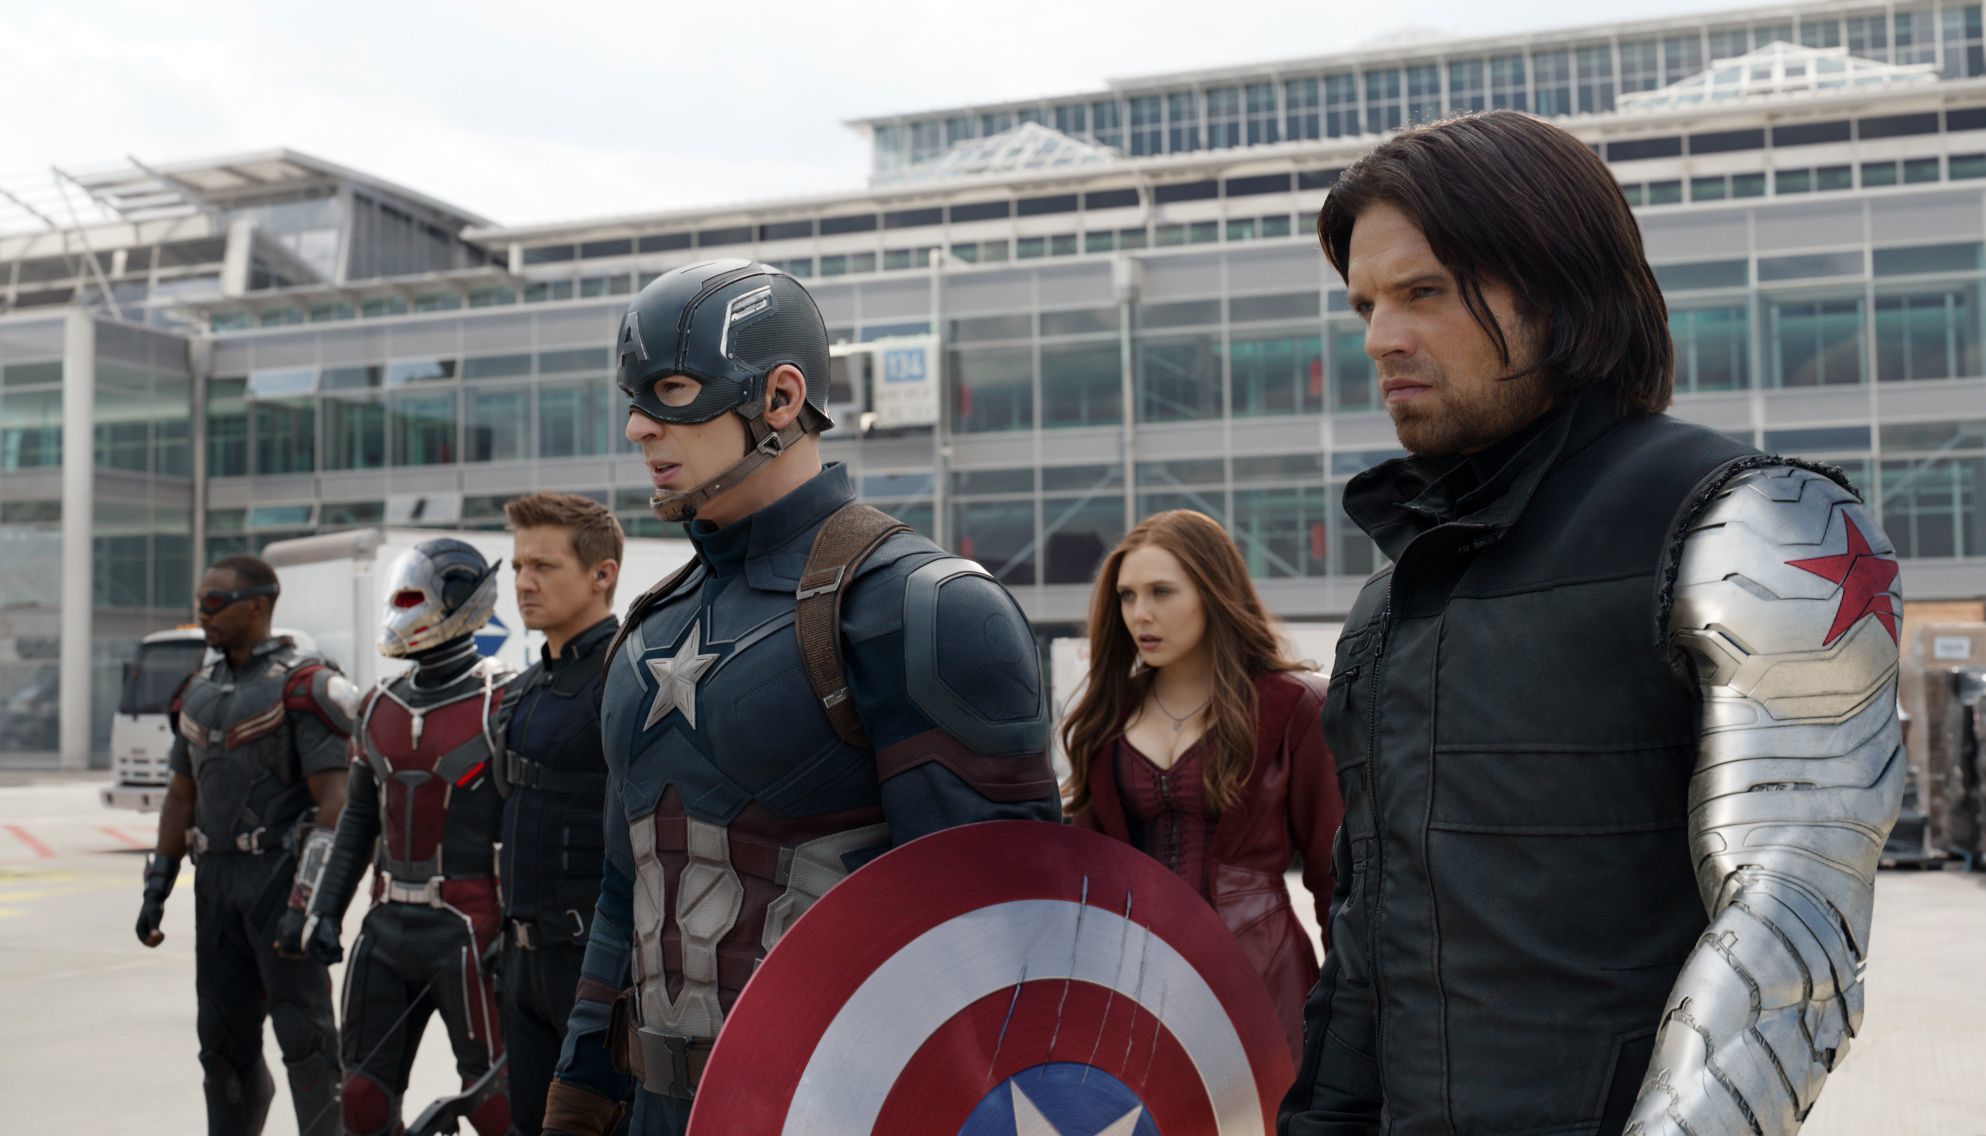 Anthony Mackie, Paul Rudd, Jeremy Renner, Chris Evans, Elizabeth Olsen and Sebastian Stan appear in a scene from “Captain America: Civil War.”